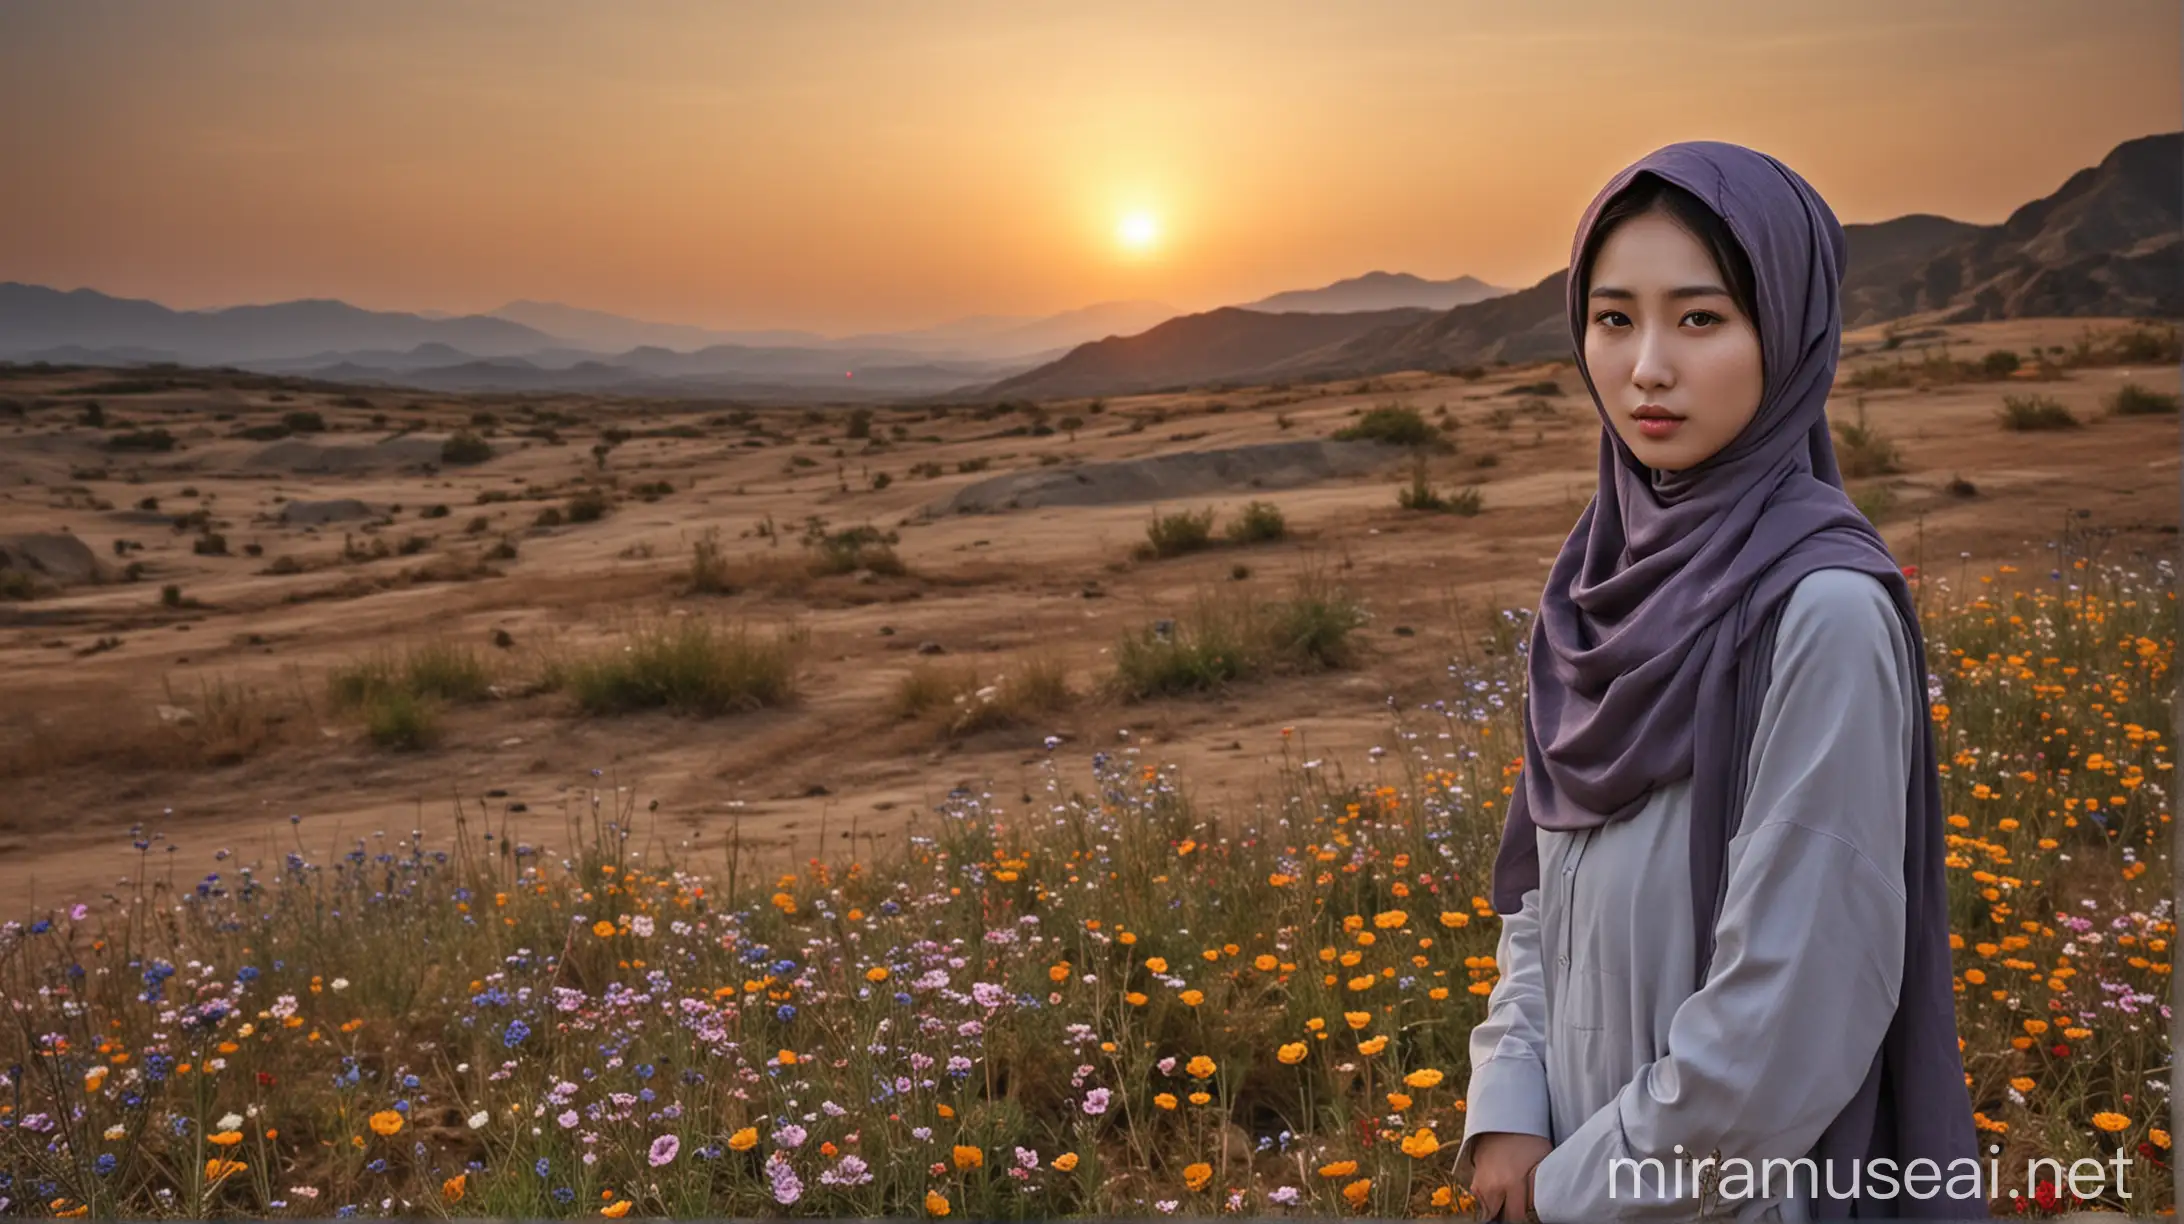 Beautiful Korean Muslim Woman Amidst Wildflowers at Sunset in Barren Deserted Land